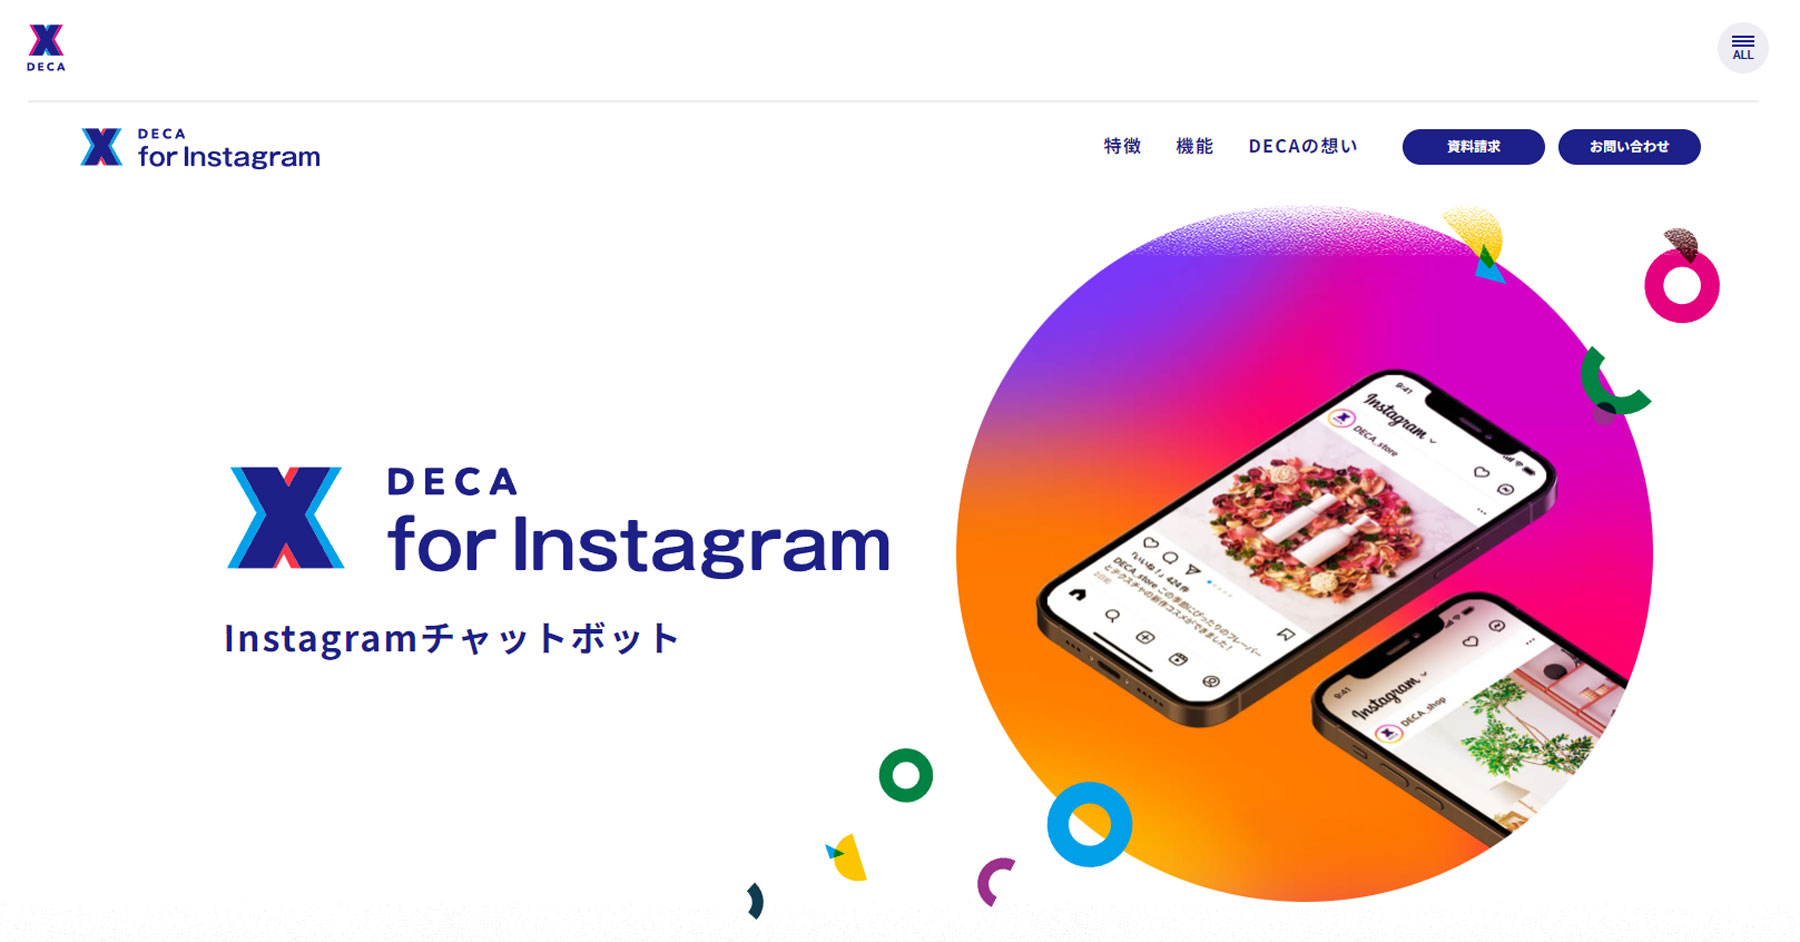 DECA for Instagram公式Webサイト